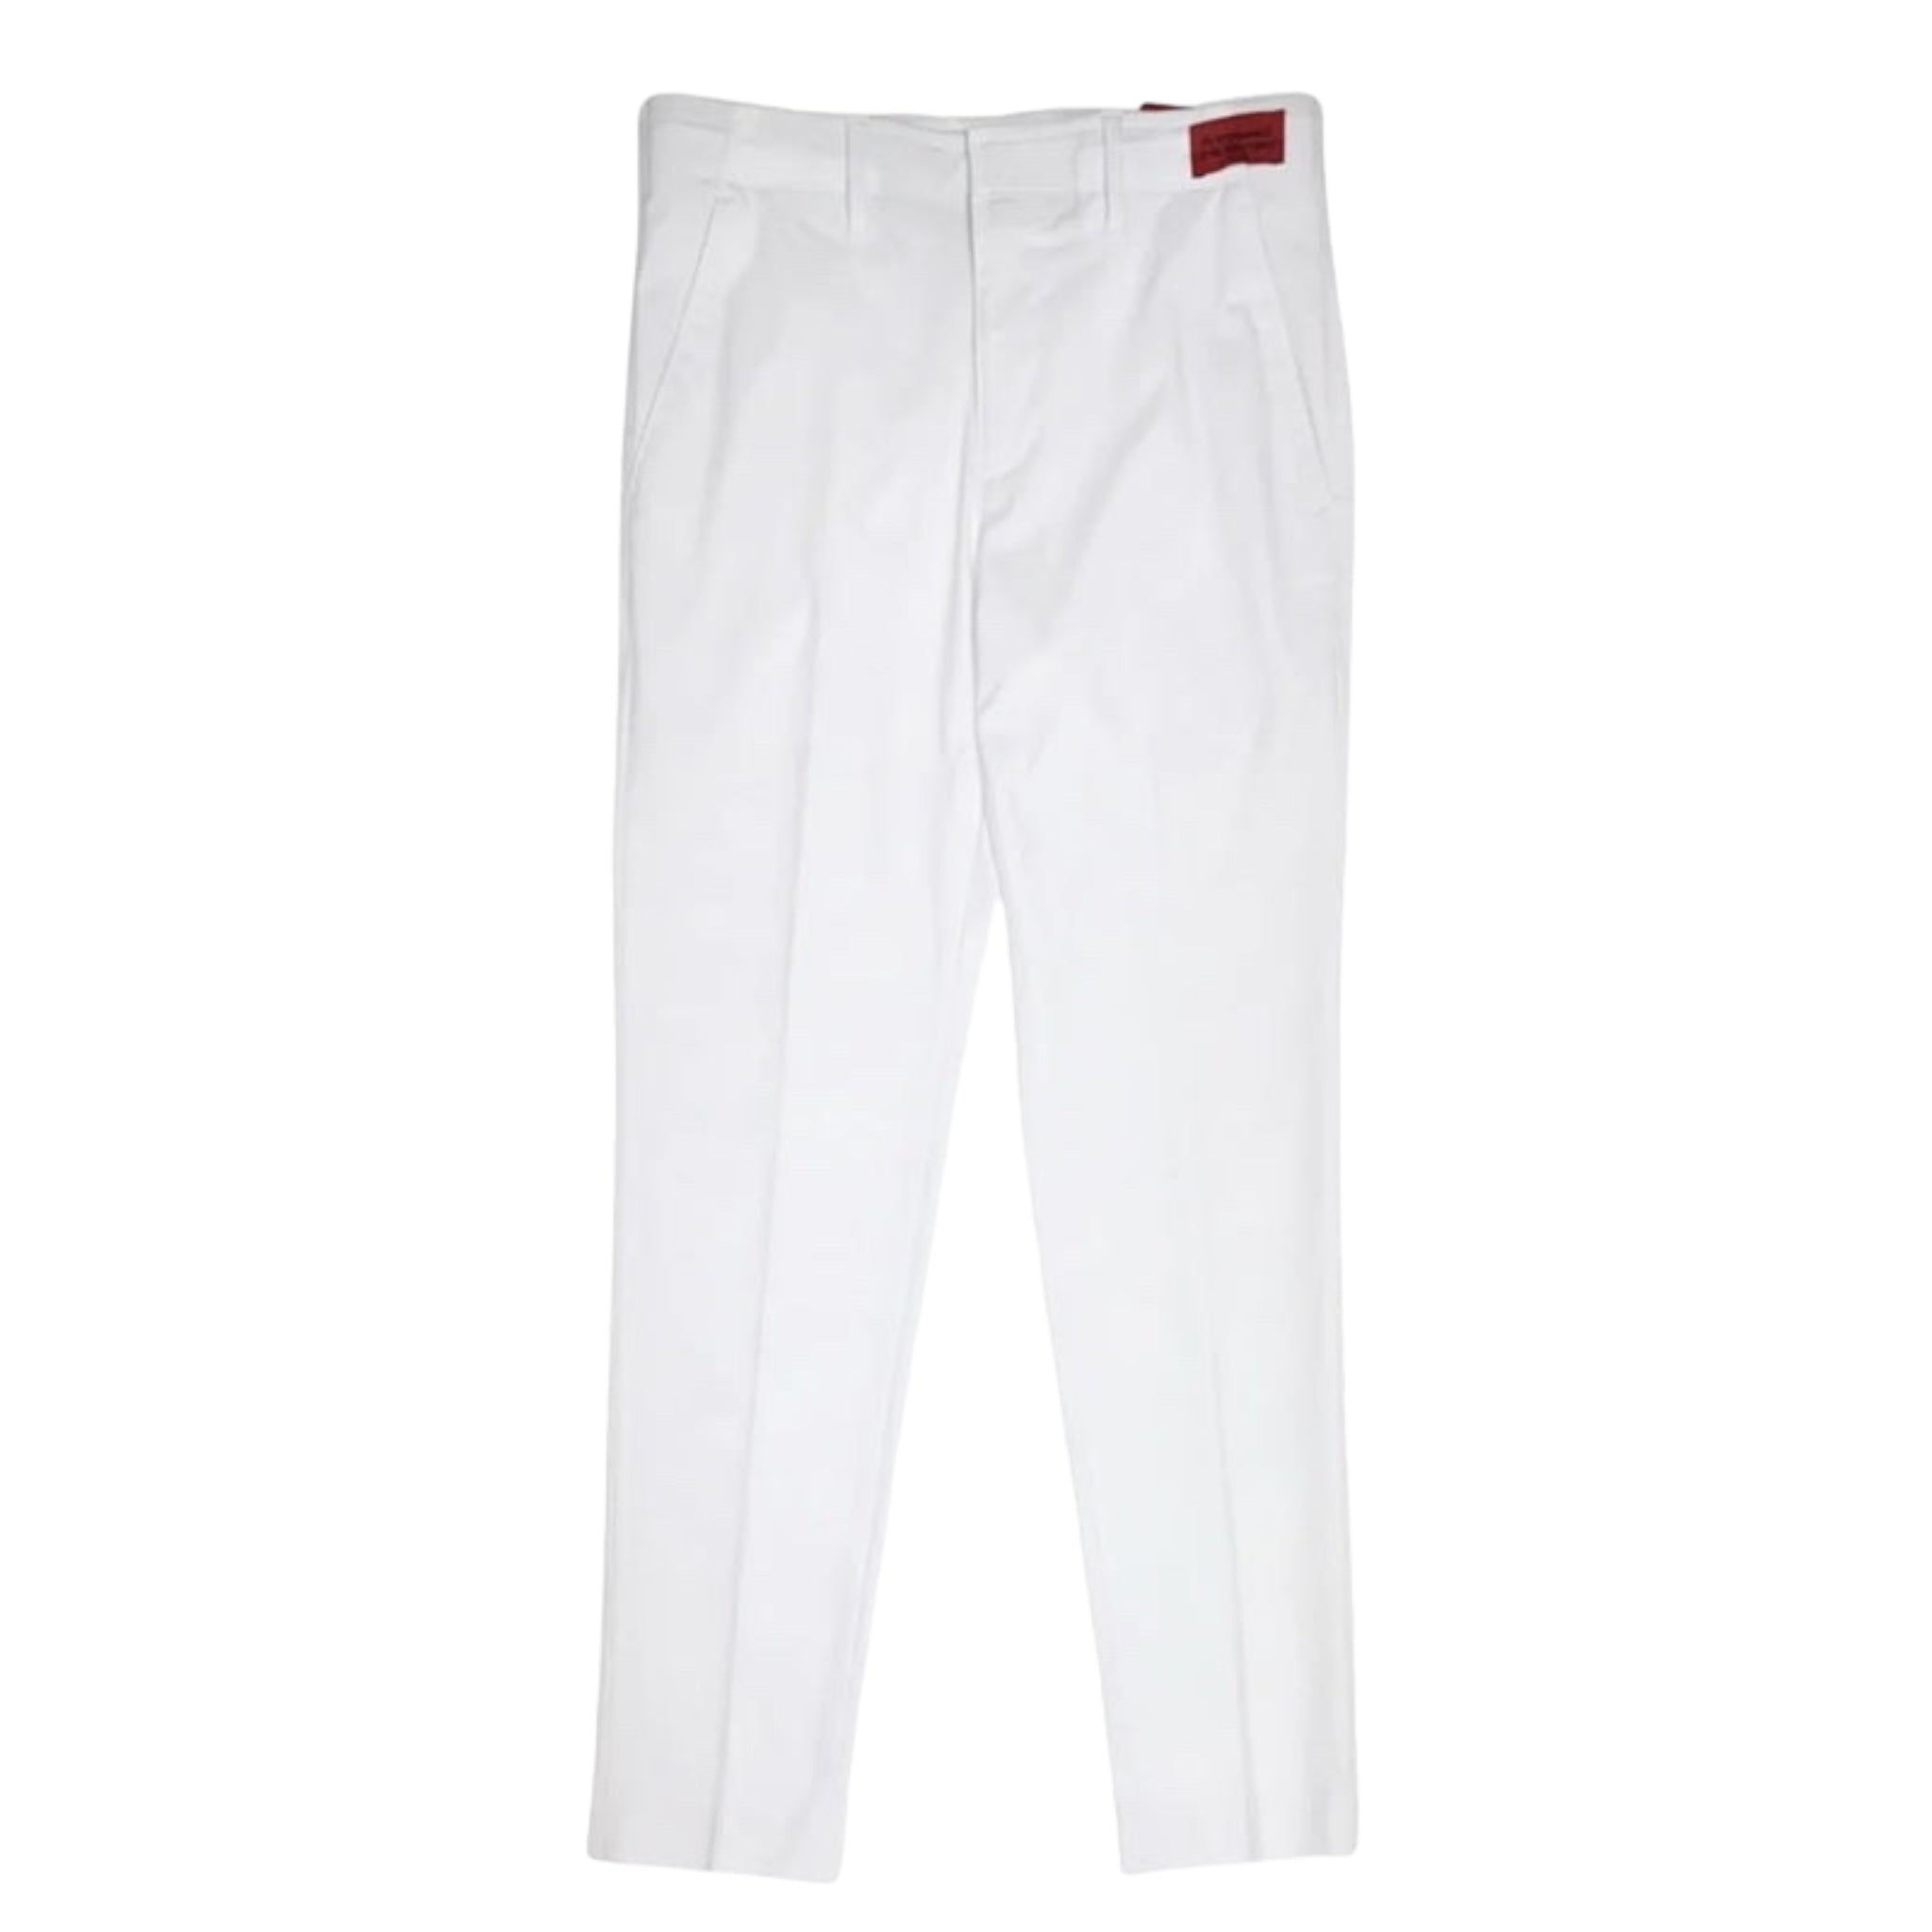 Mazari 4 Way Stretch Ultra Slim Fit Dress Pant White